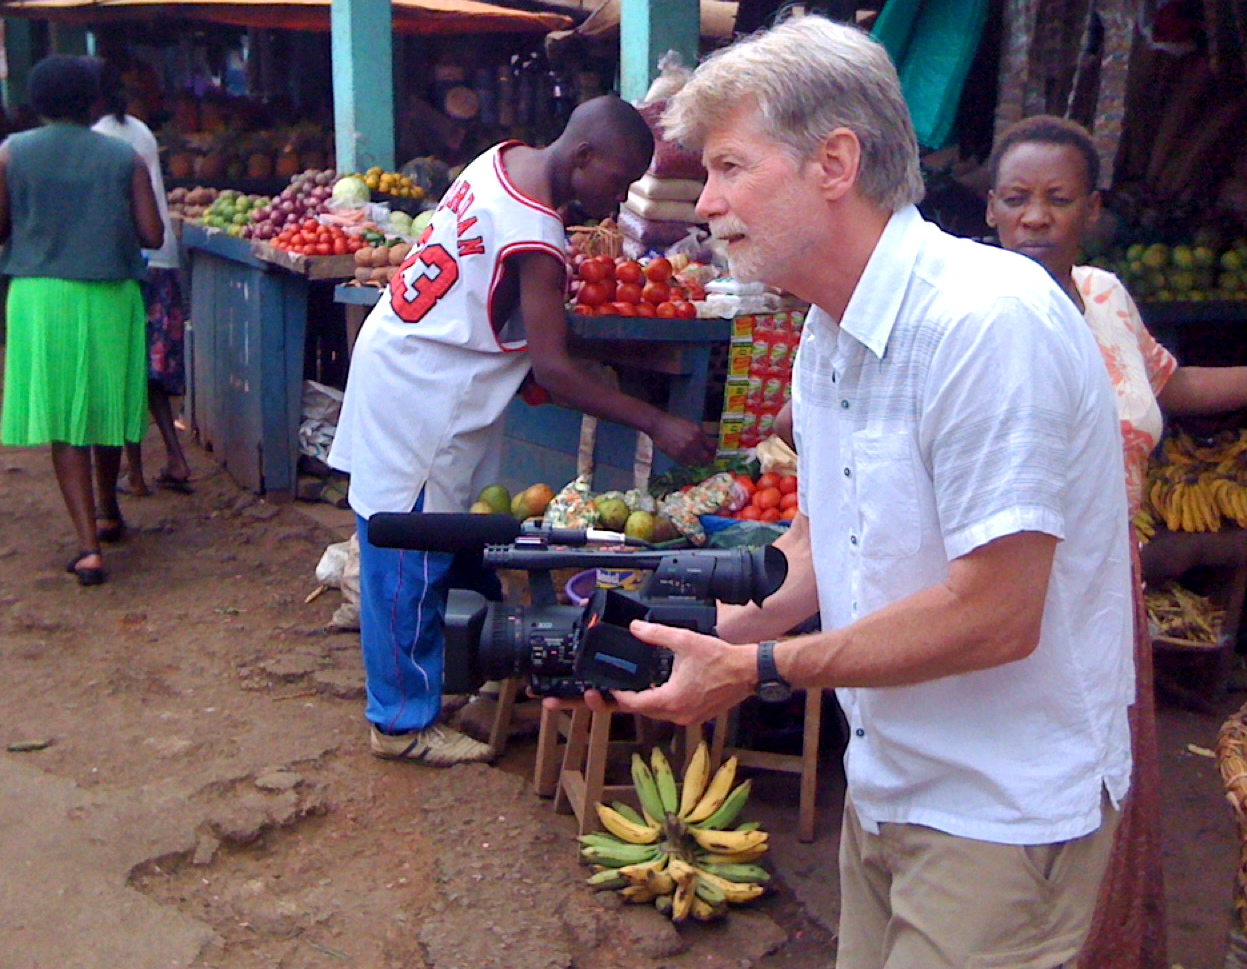 Sam Kauffmann filming in Uganda